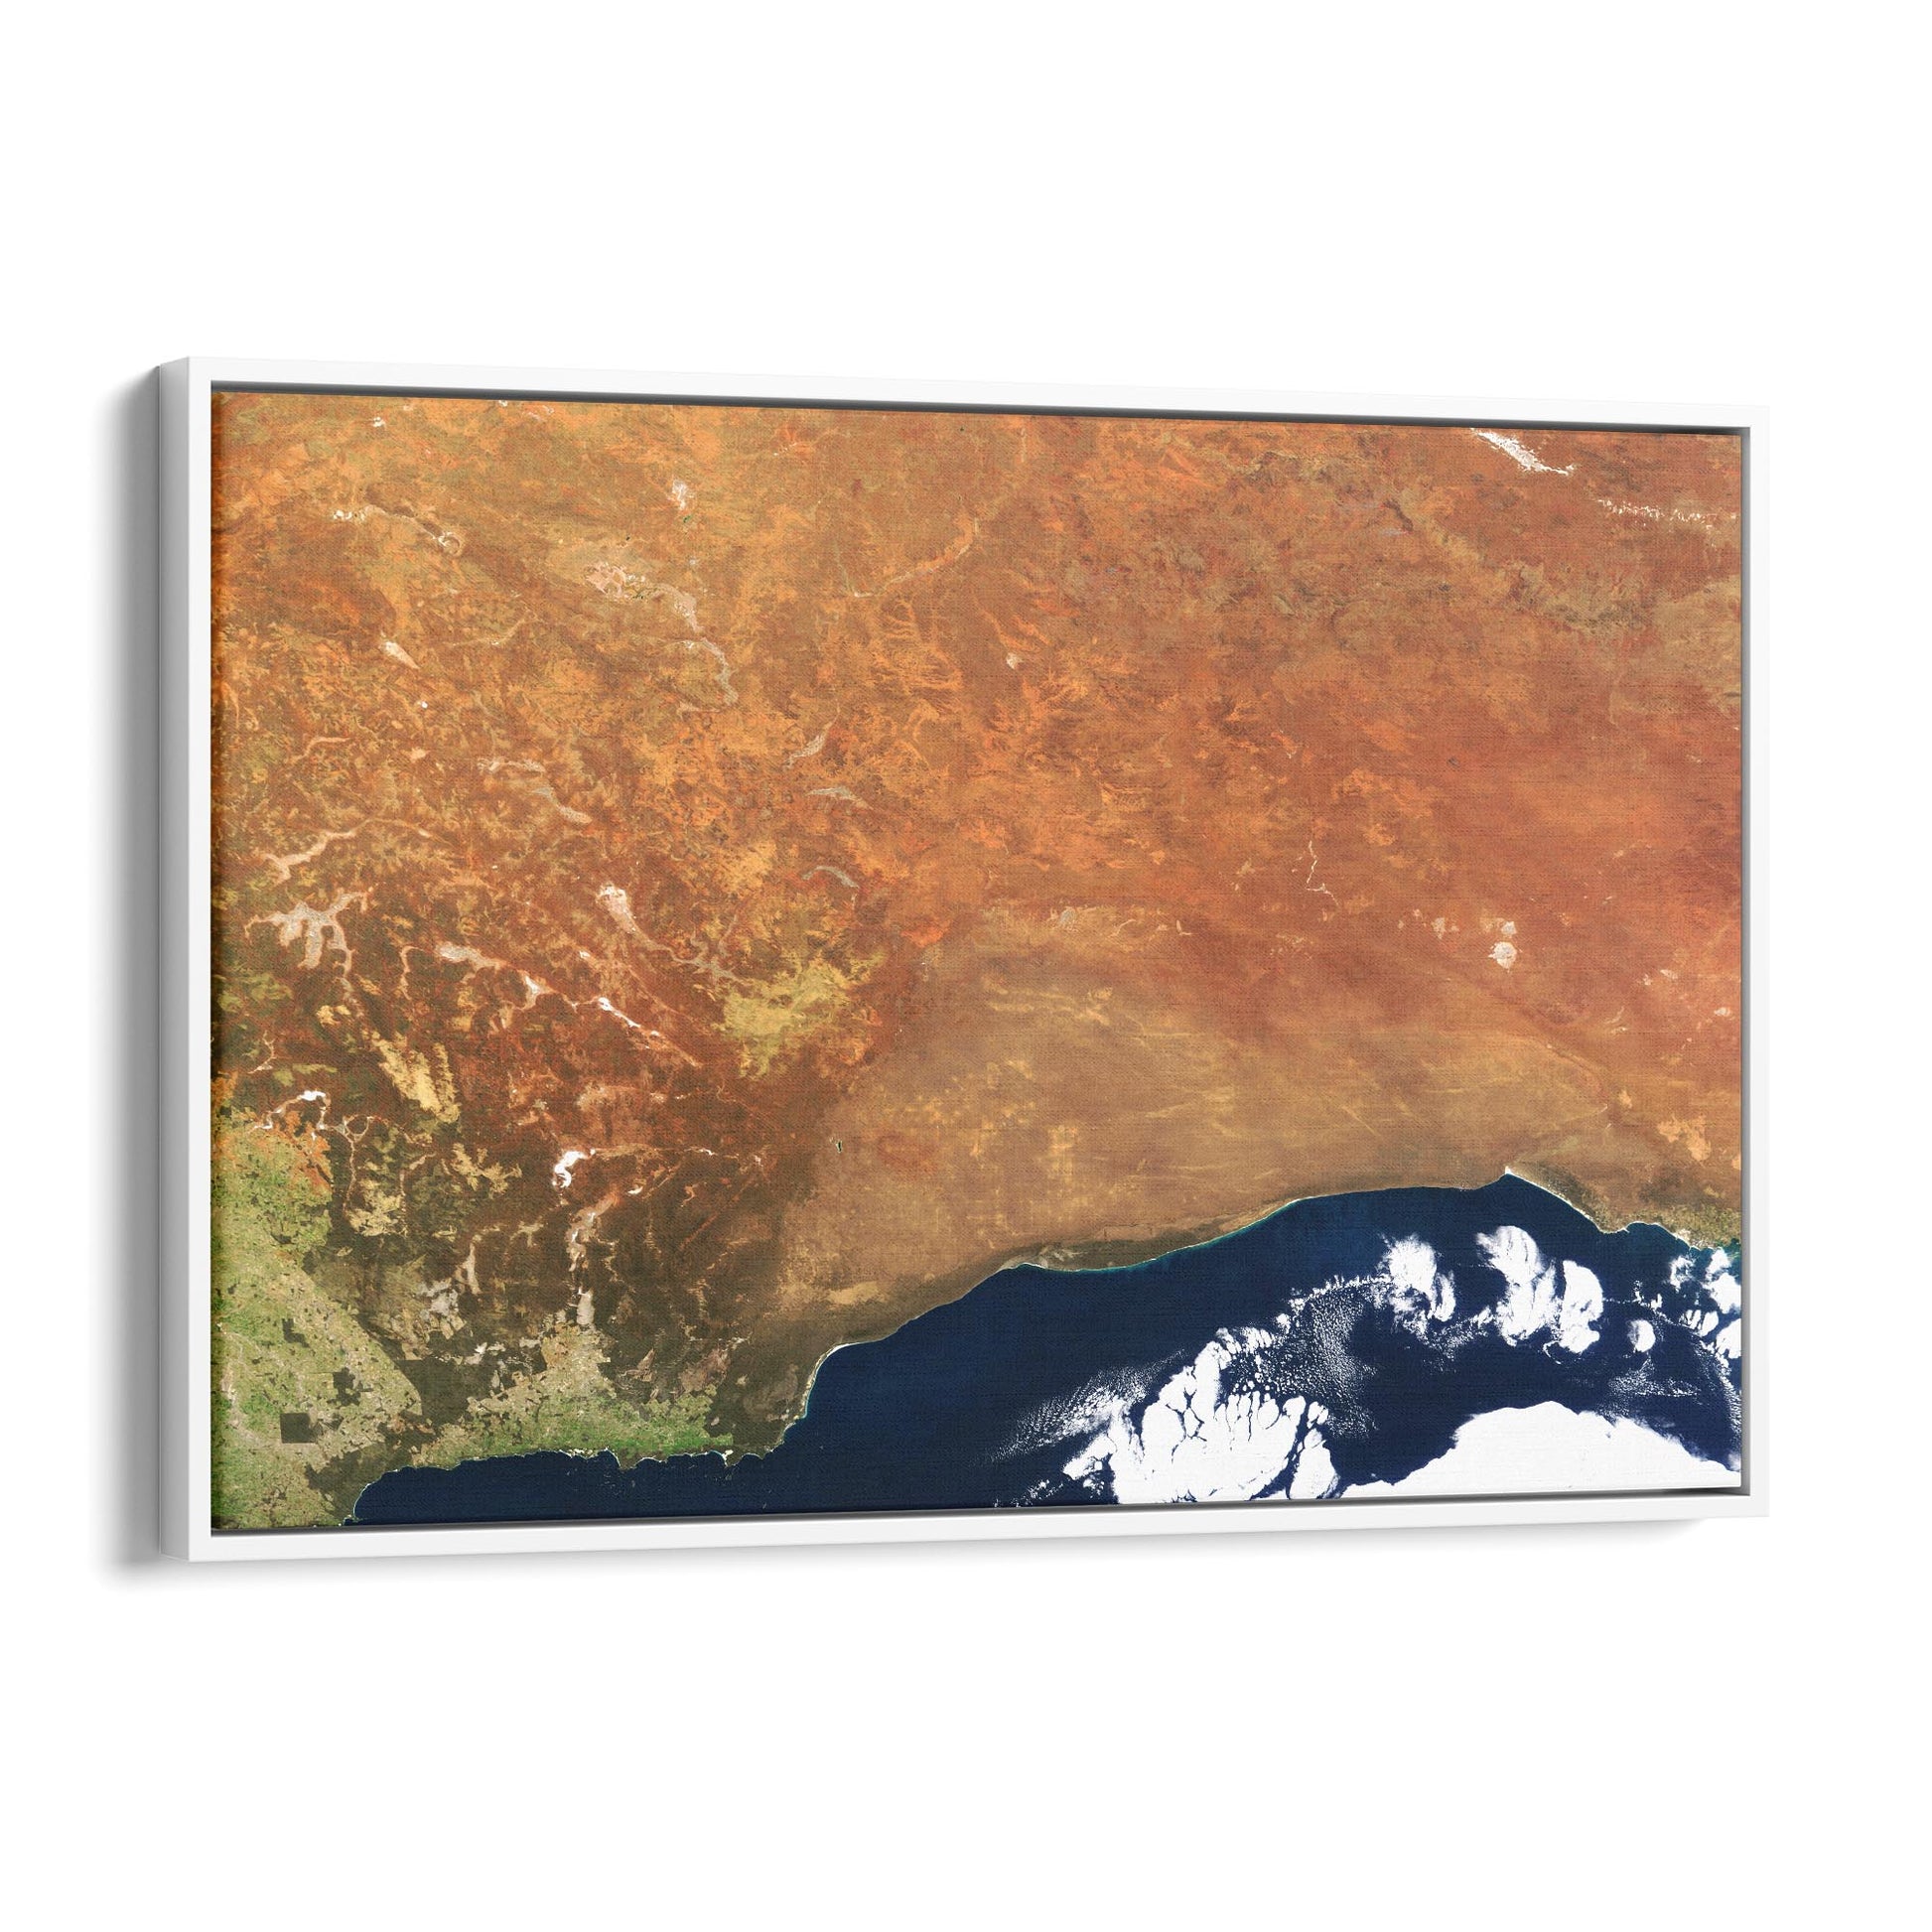 The Nullarbor Plain, Australia Photograph Wall Art - The Affordable Art Company